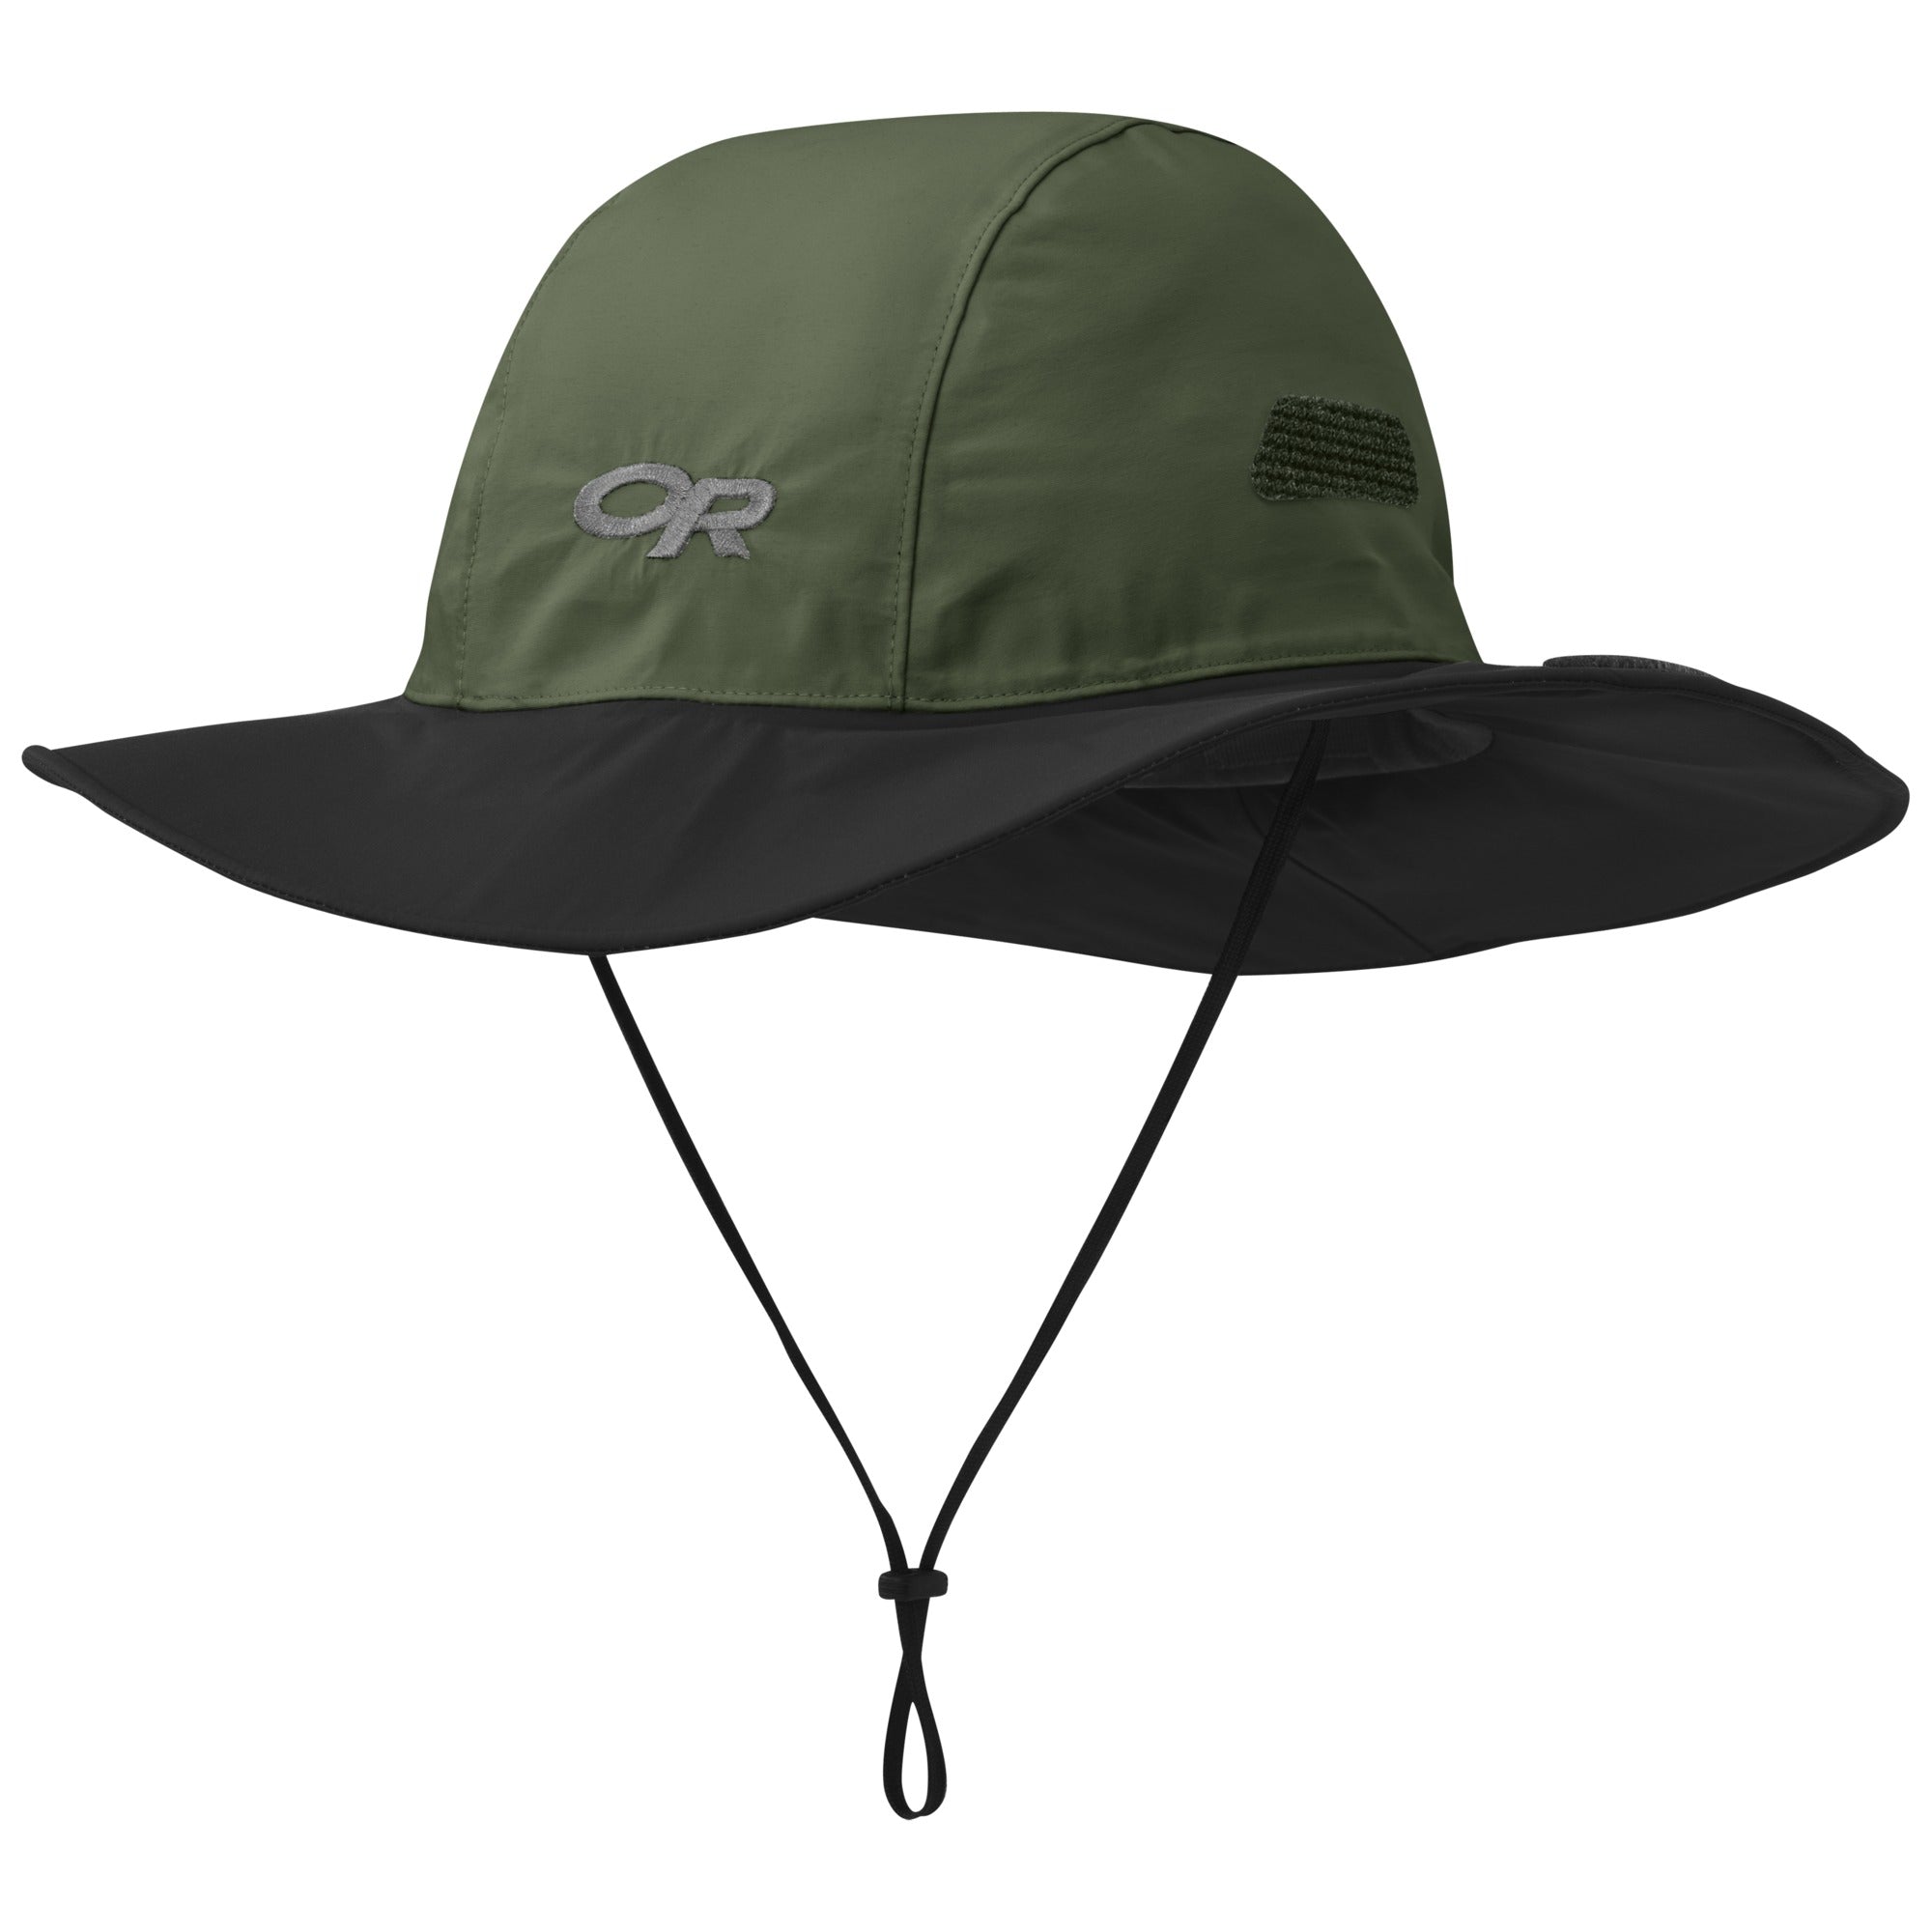 Outdoor Research Seattle Sombrero Rain Hat - Gear For Adventure